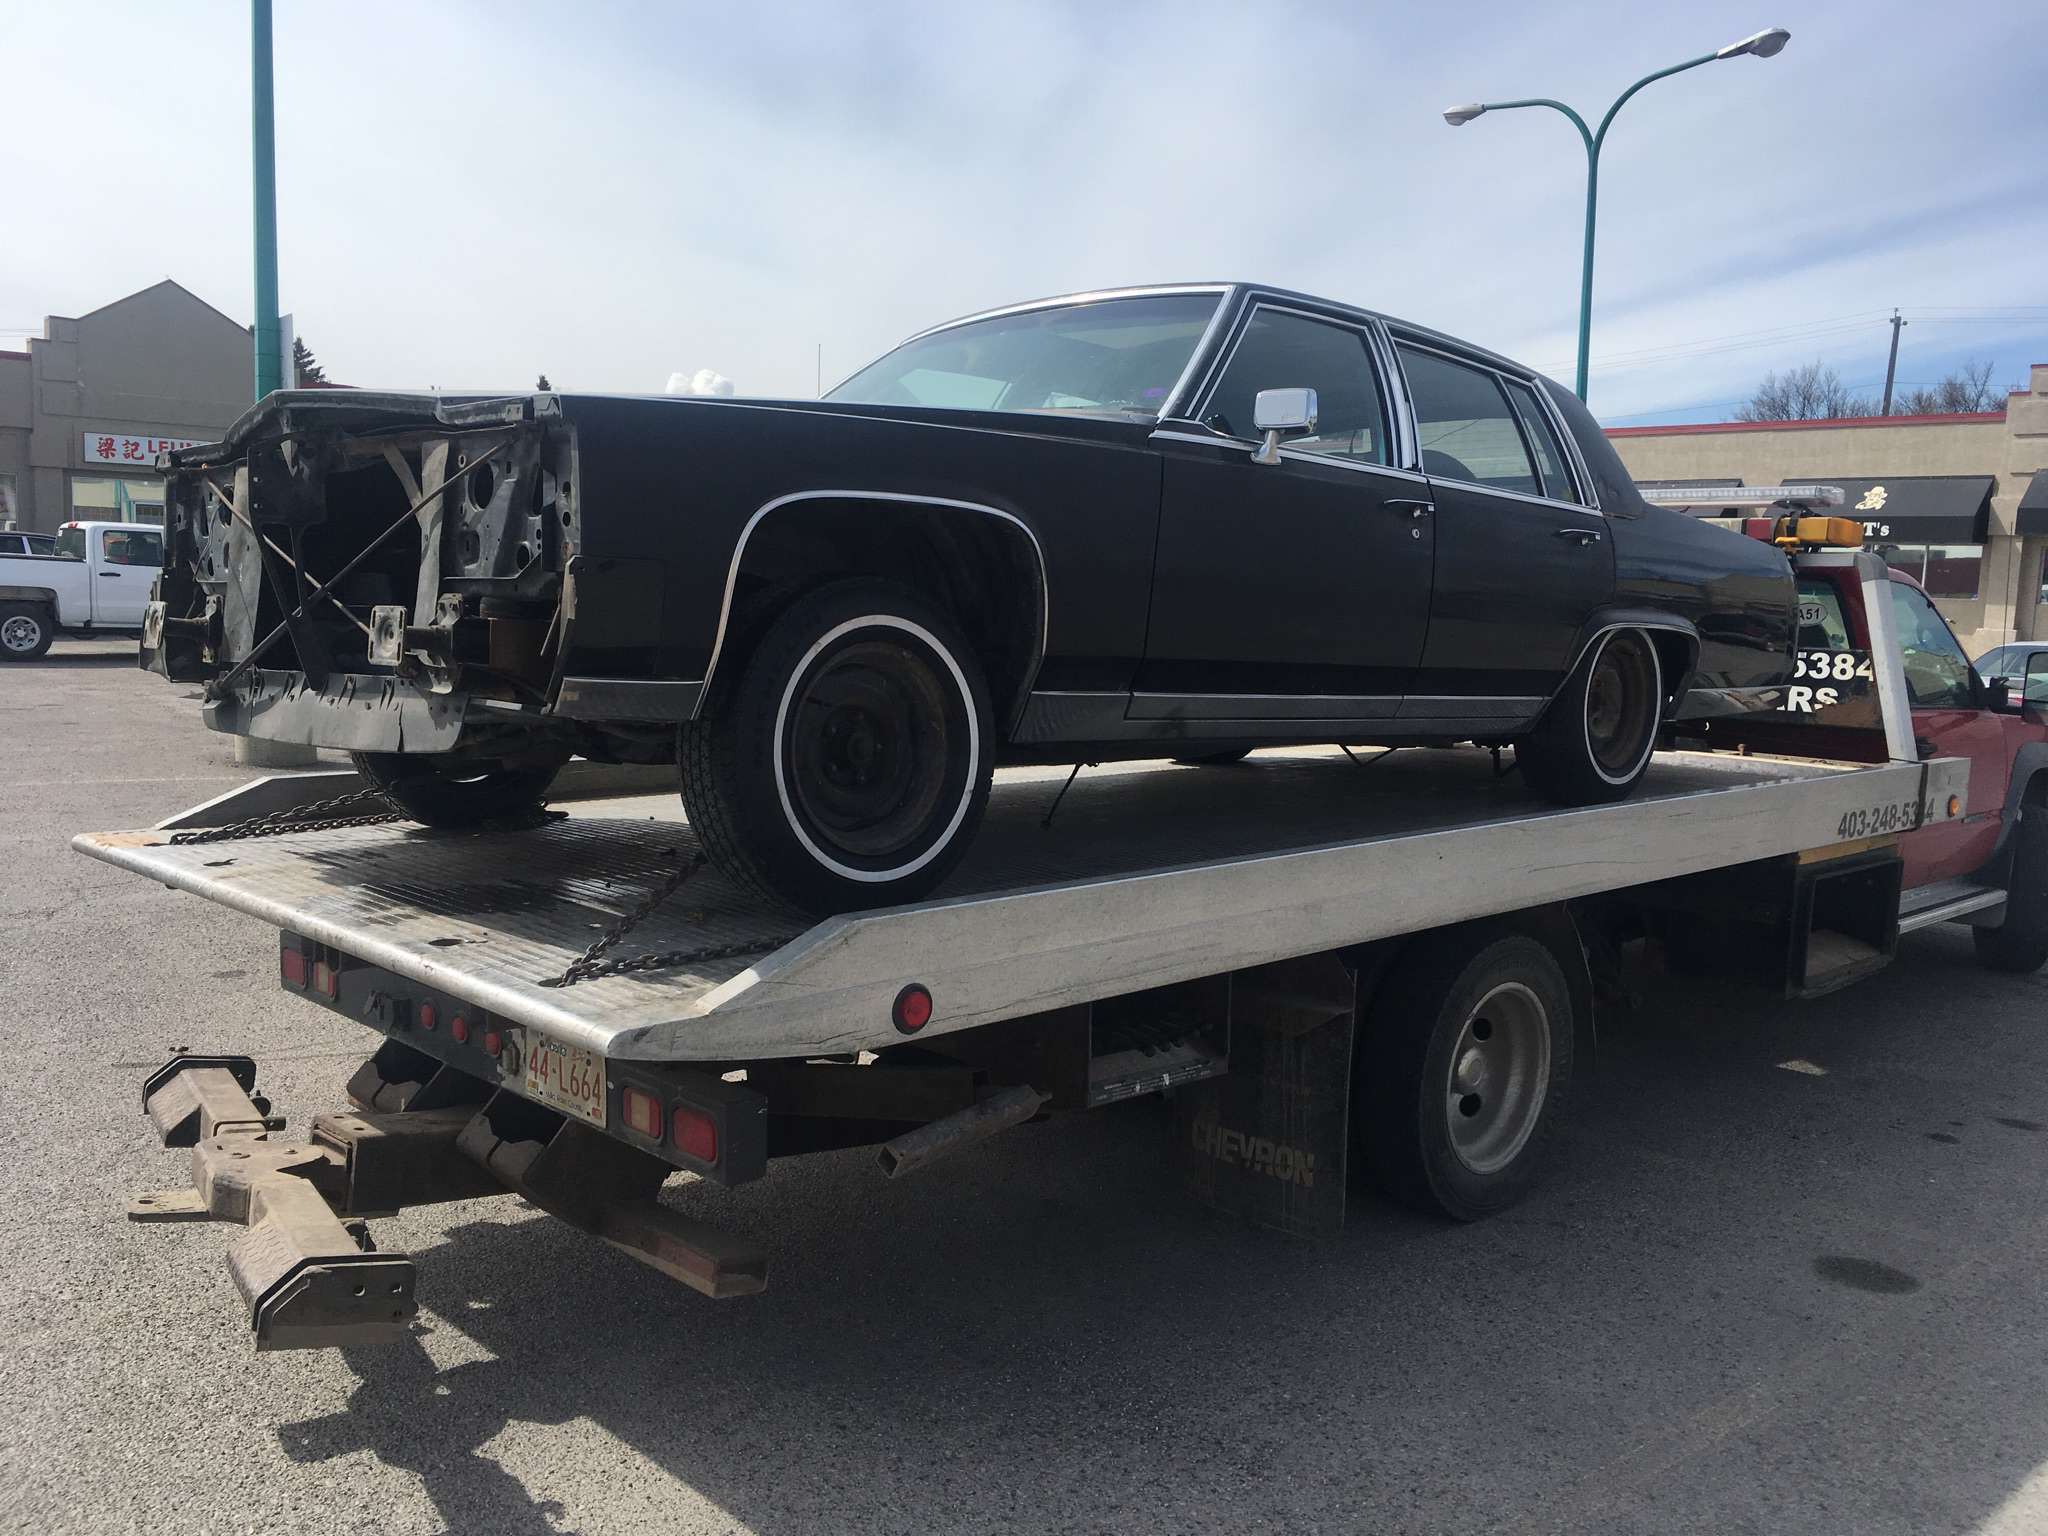 Scrap Car Removal Calgary